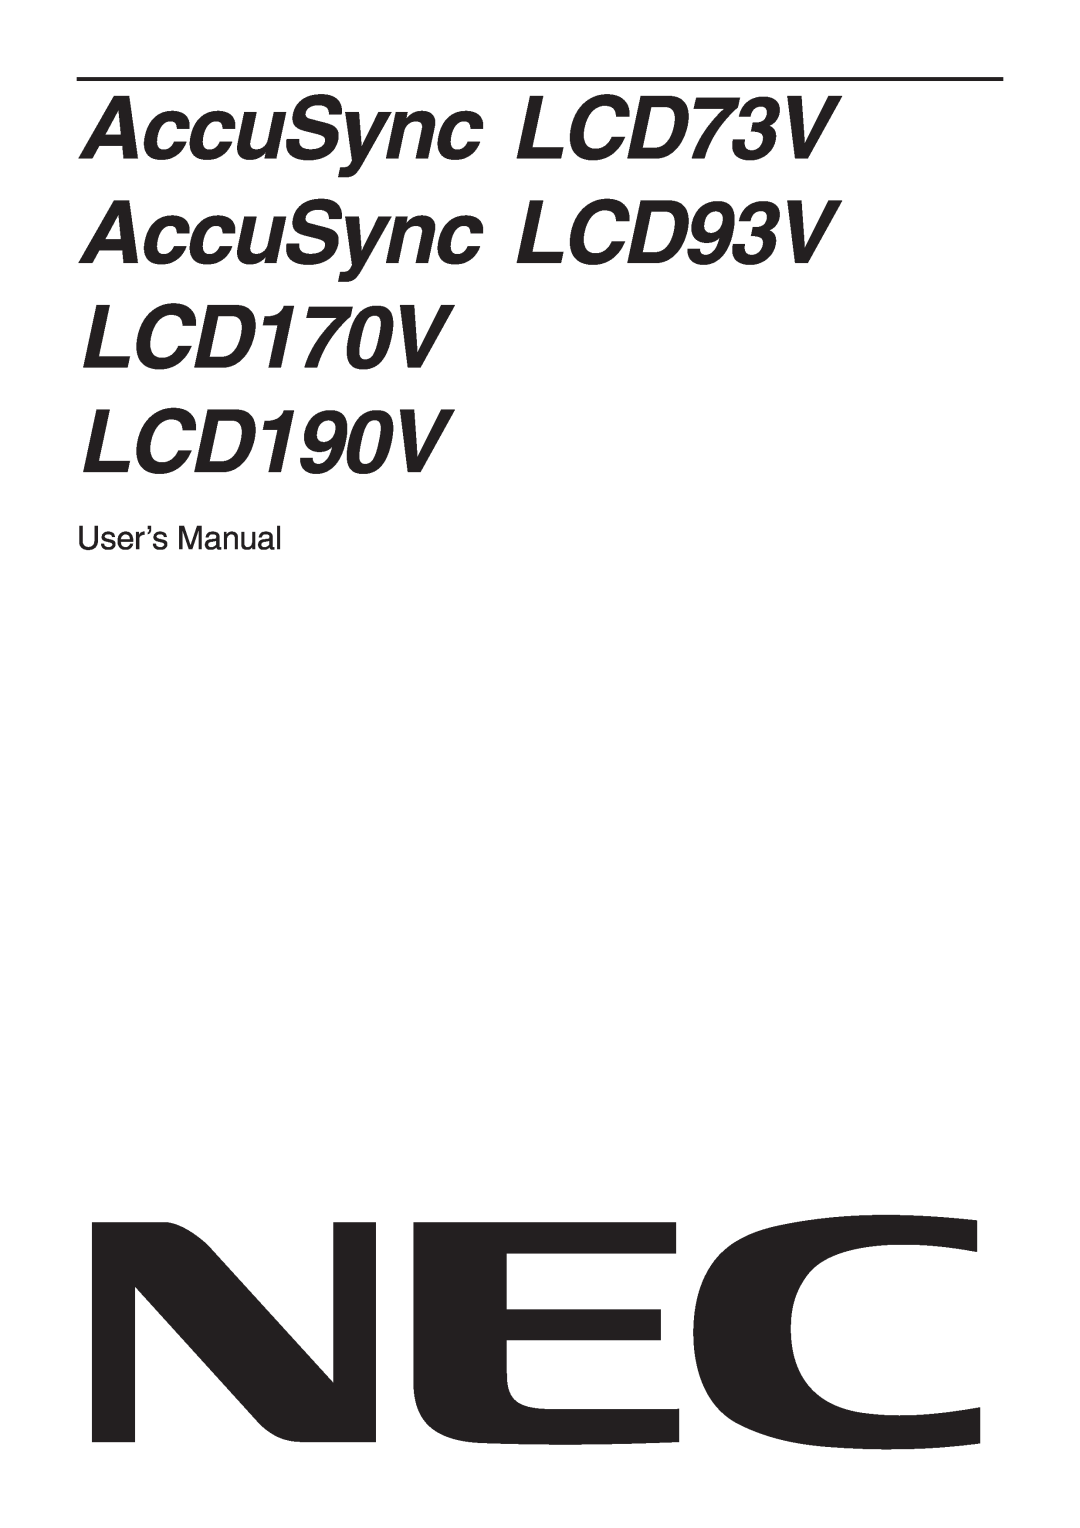 NEC manual NEC AccuSync LCD93V 